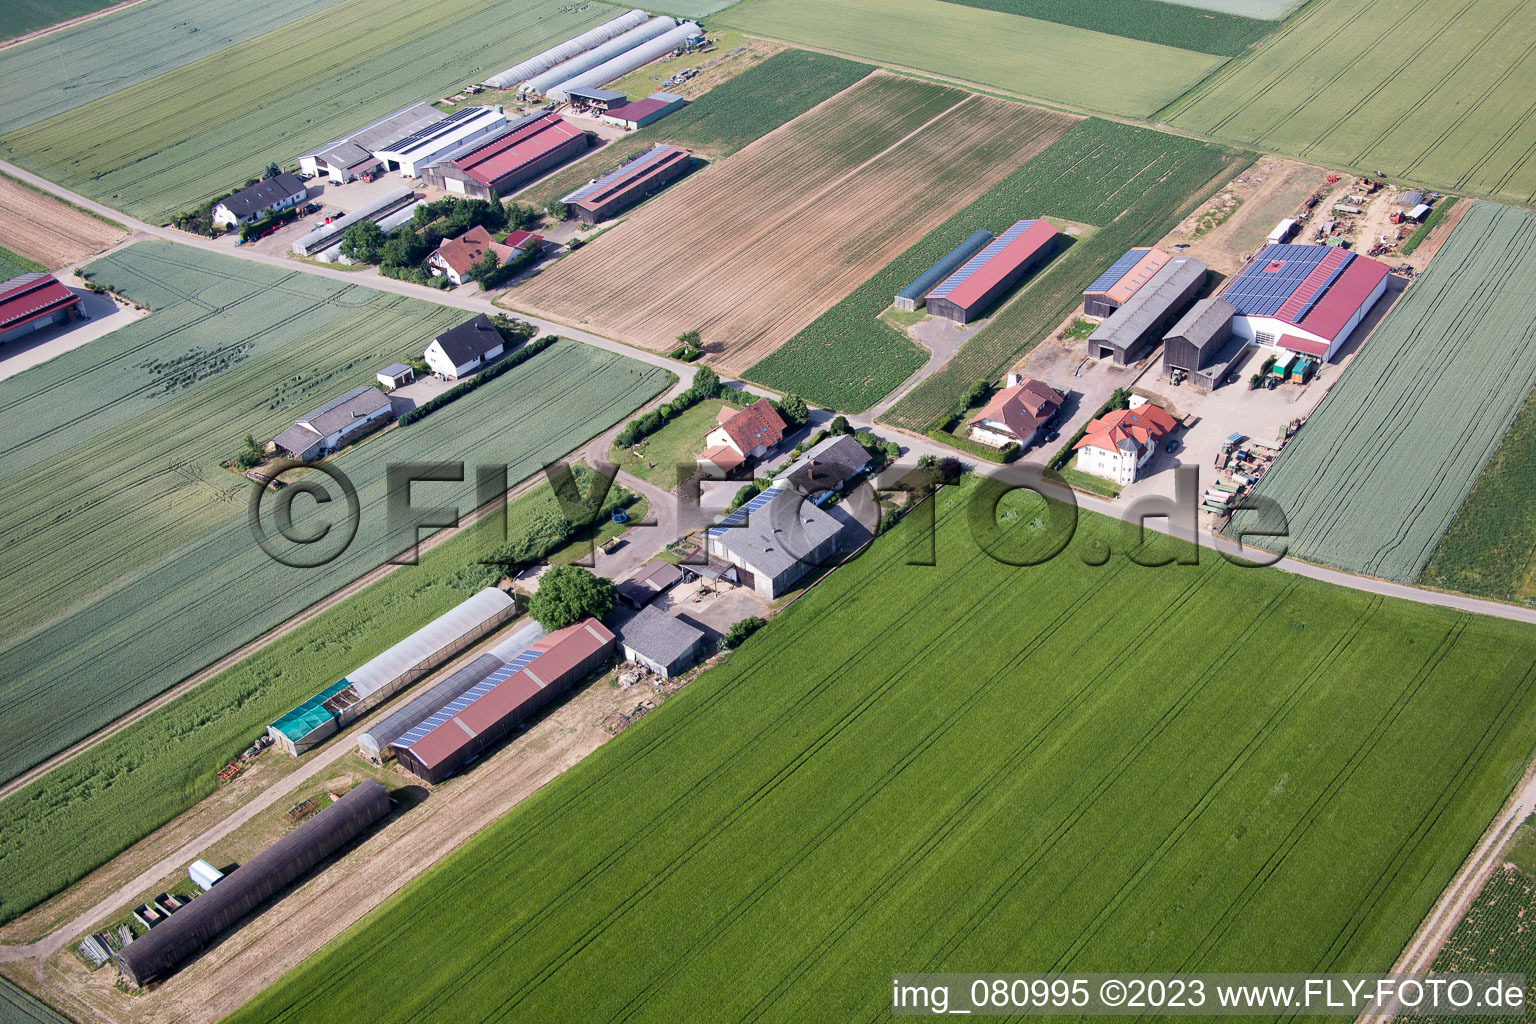 District Herxheim in Herxheim bei Landau/Pfalz in the state Rhineland-Palatinate, Germany seen from a drone